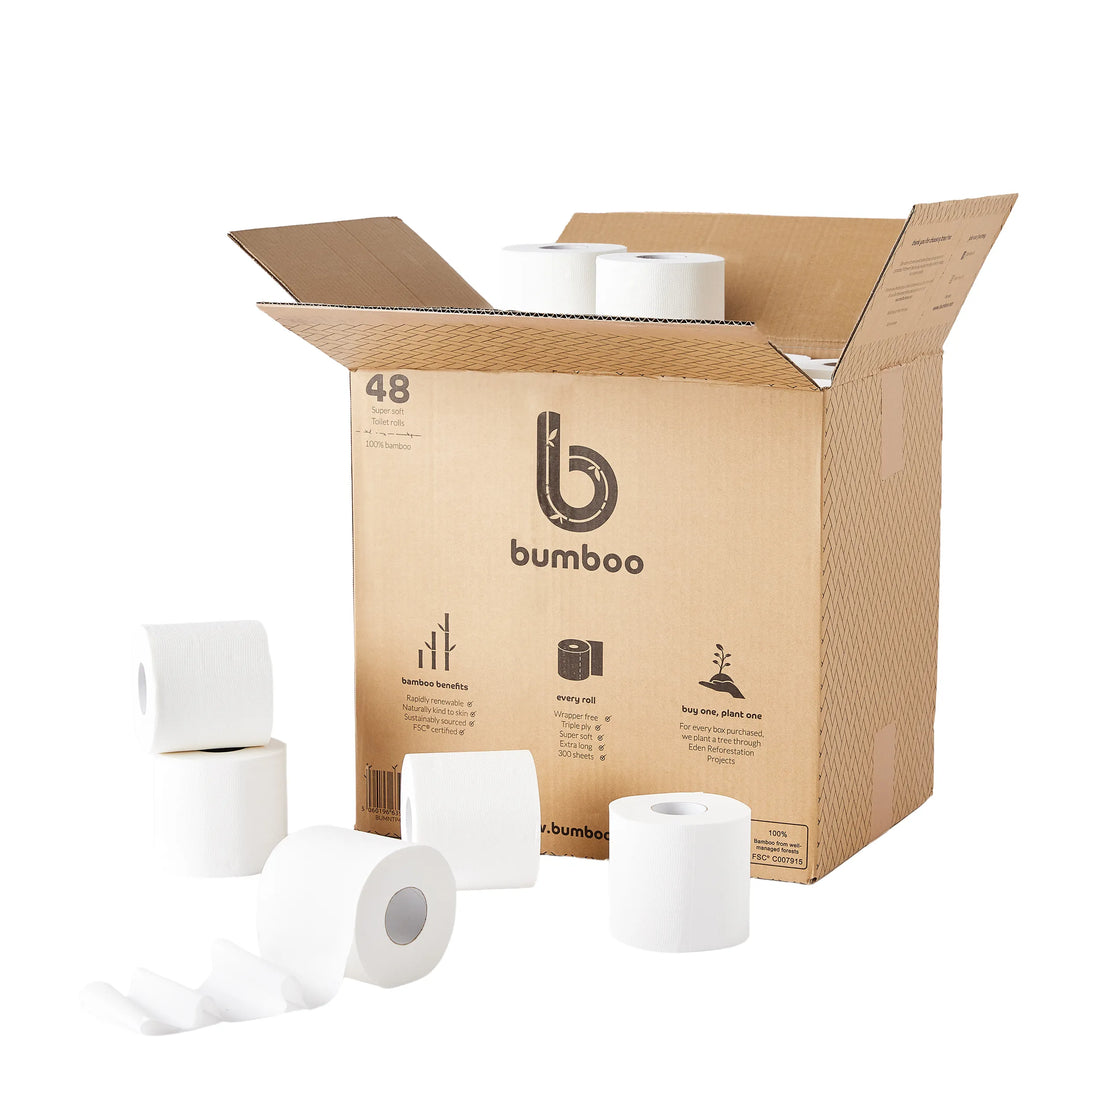 bumboos, bumboo, bamboo-tissue, bumboo-subscription, bamboo-tissue, toilet-paper-company, toilet-paper-subscription, free-delivery, 48-toilet-rolls, toilet-roll-subscription